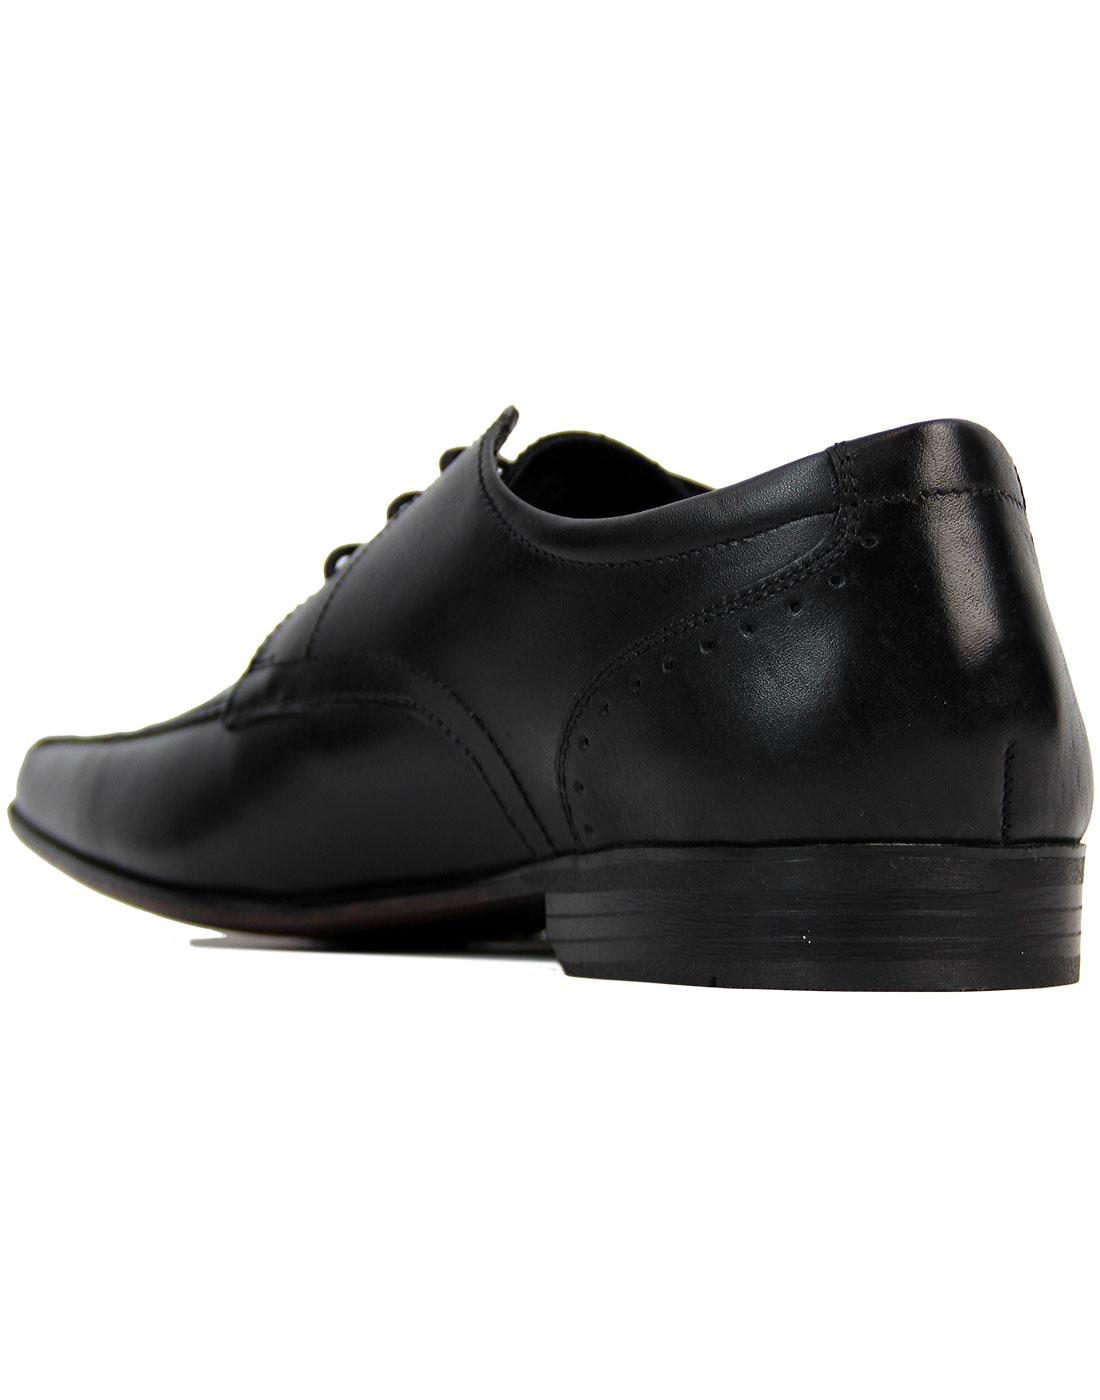 IKON Fraser Men's Retro 60s Mod Leather Chisel Toe Shoes in Black